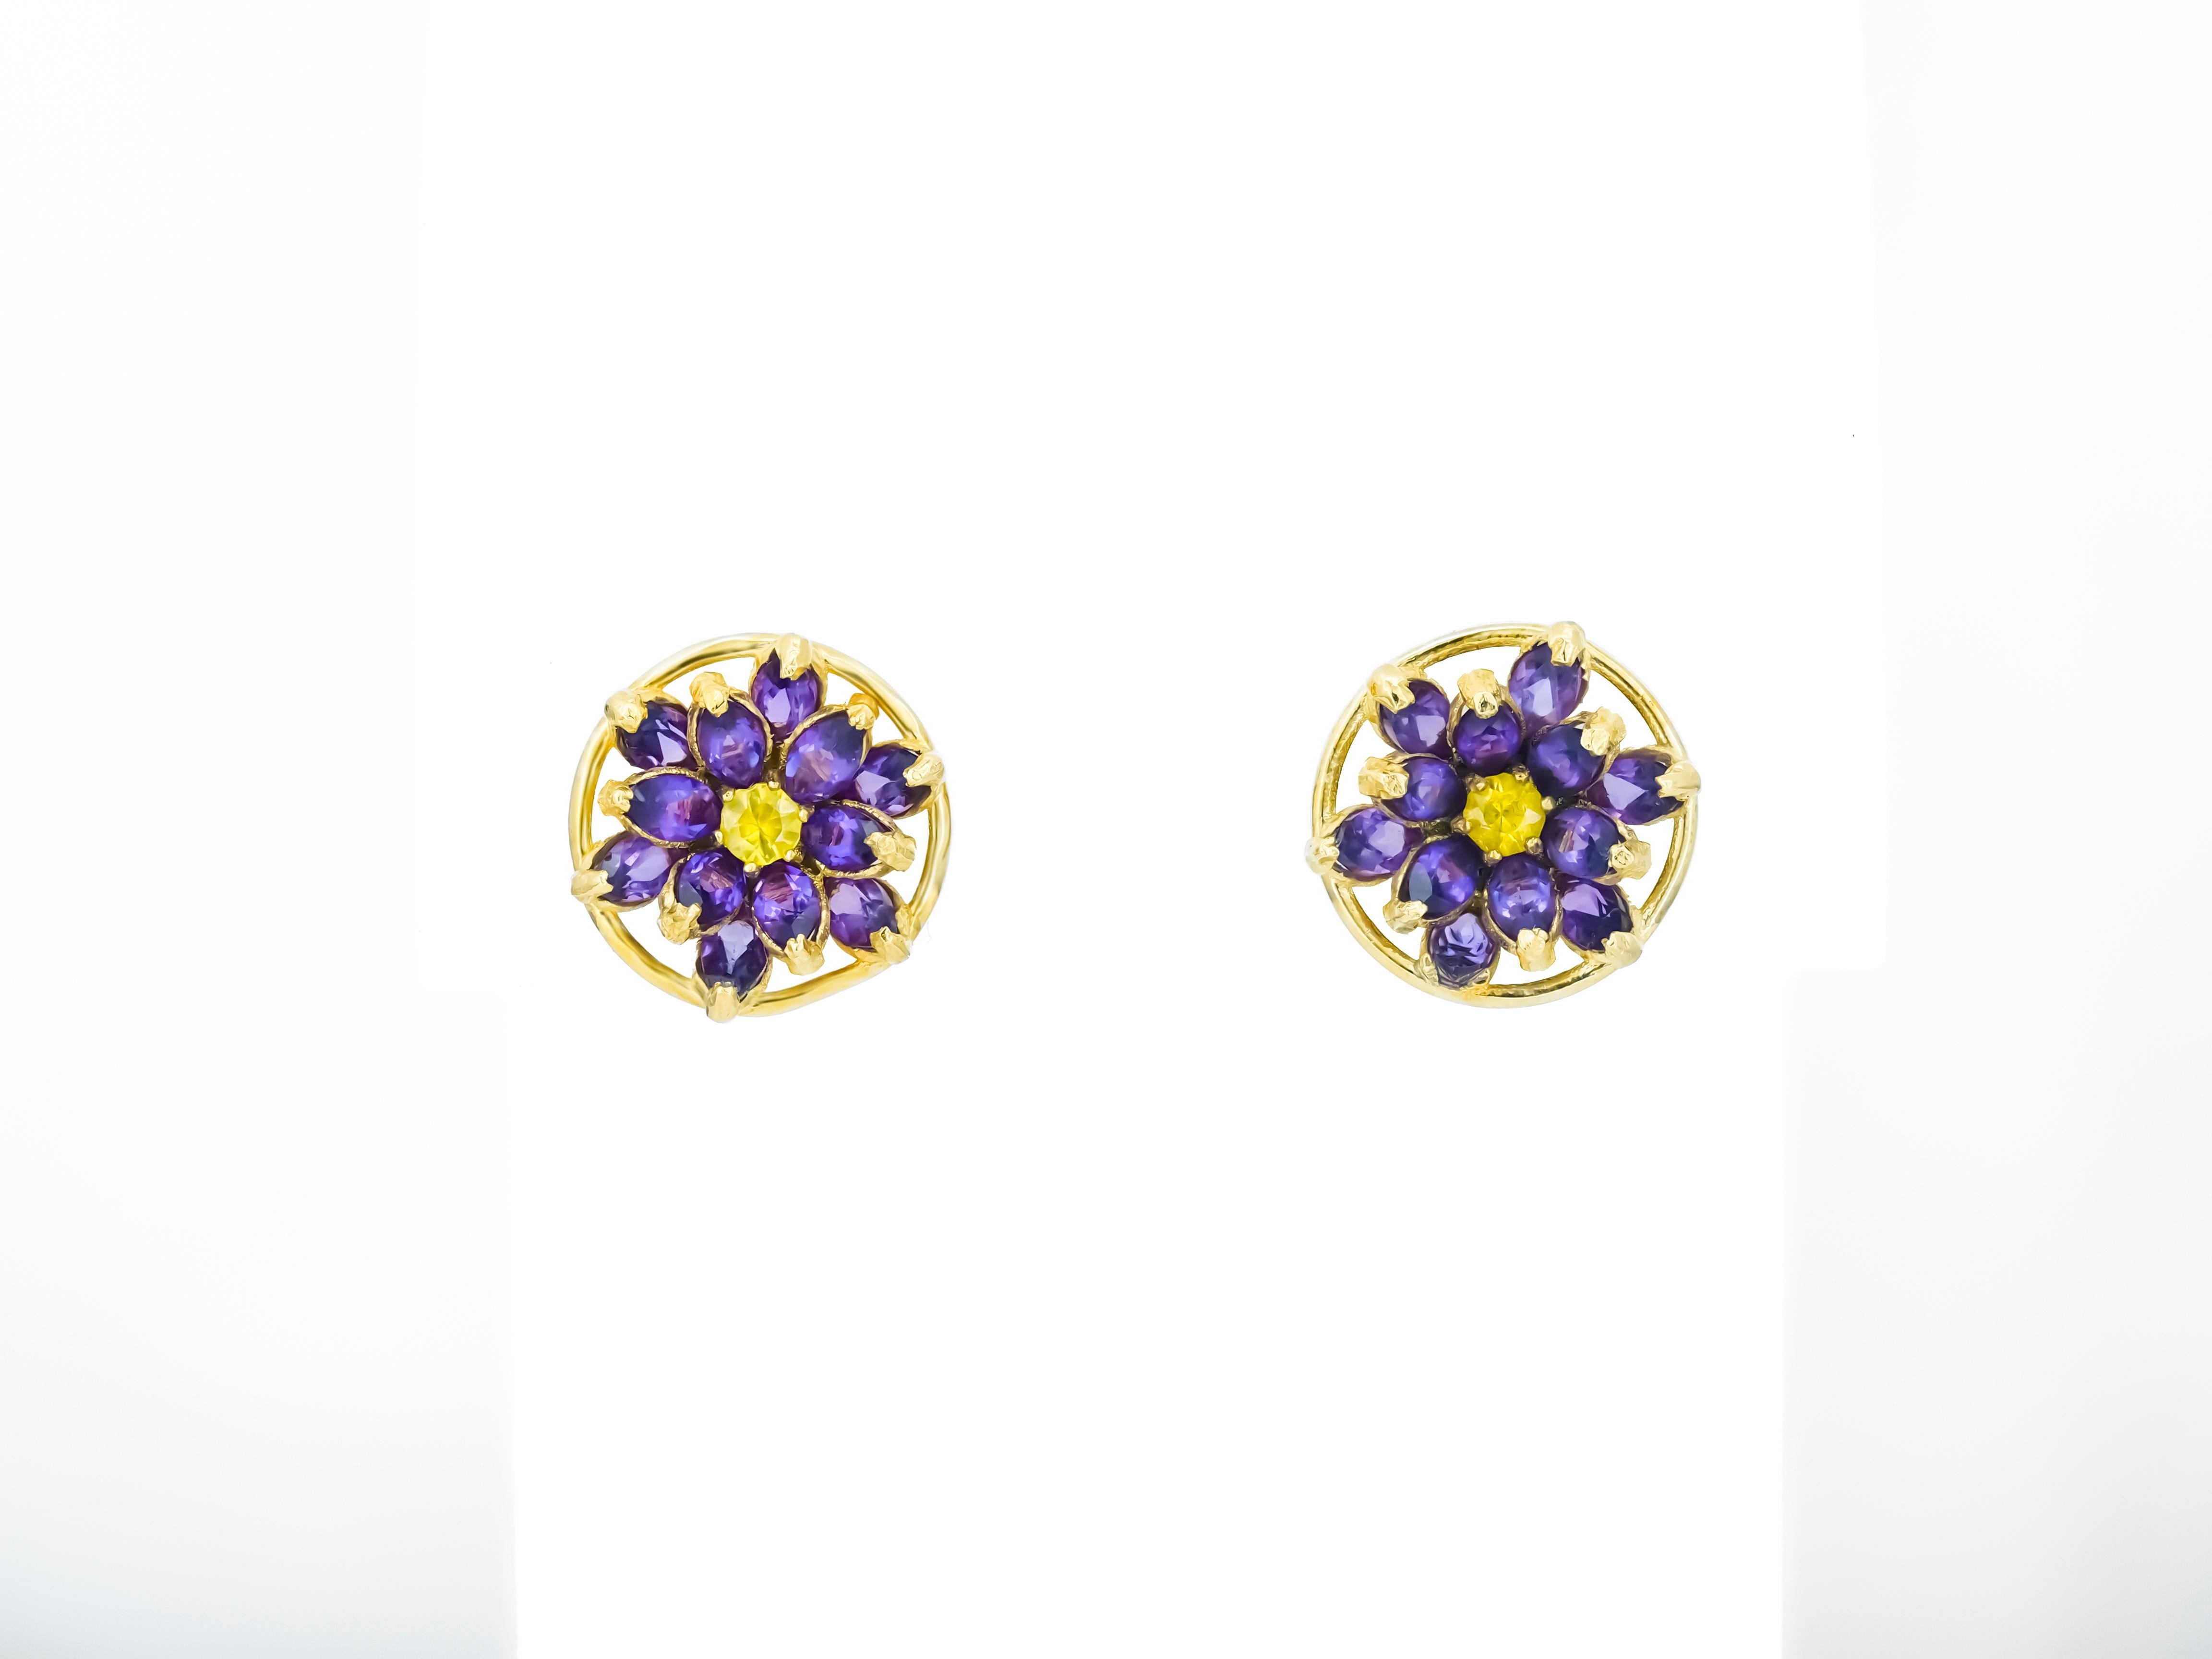 Lotus Flower Earrings Studs in 14K Gold, Amethyst and Sapphires Earrings! For Sale 4